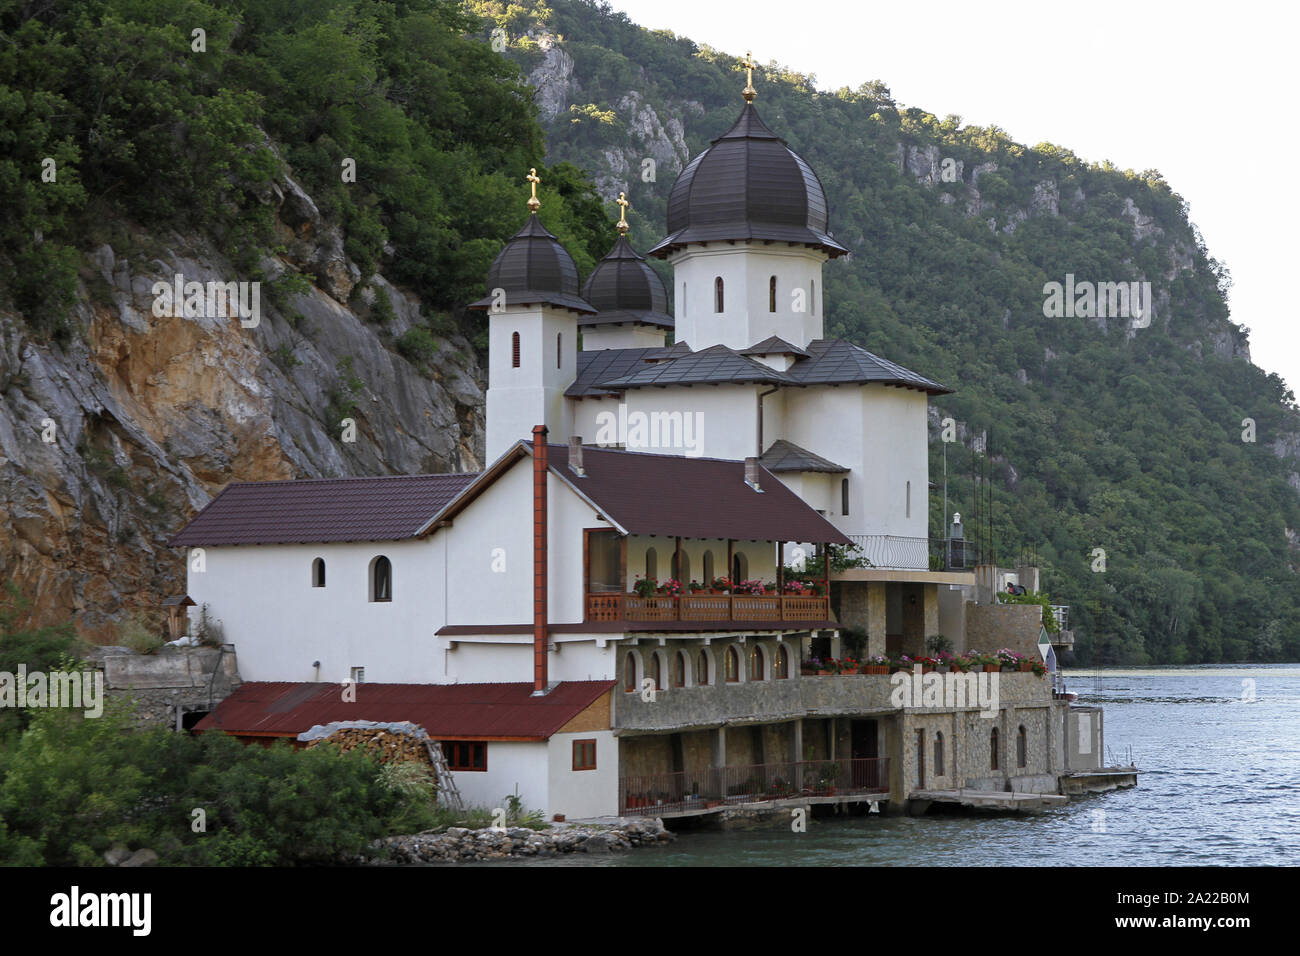 Manastirea Mraconia Monastery, a monastery on the Romanian bank of the Danube River, border between Romania and Serbia, Dubova, Romania. Stock Photo